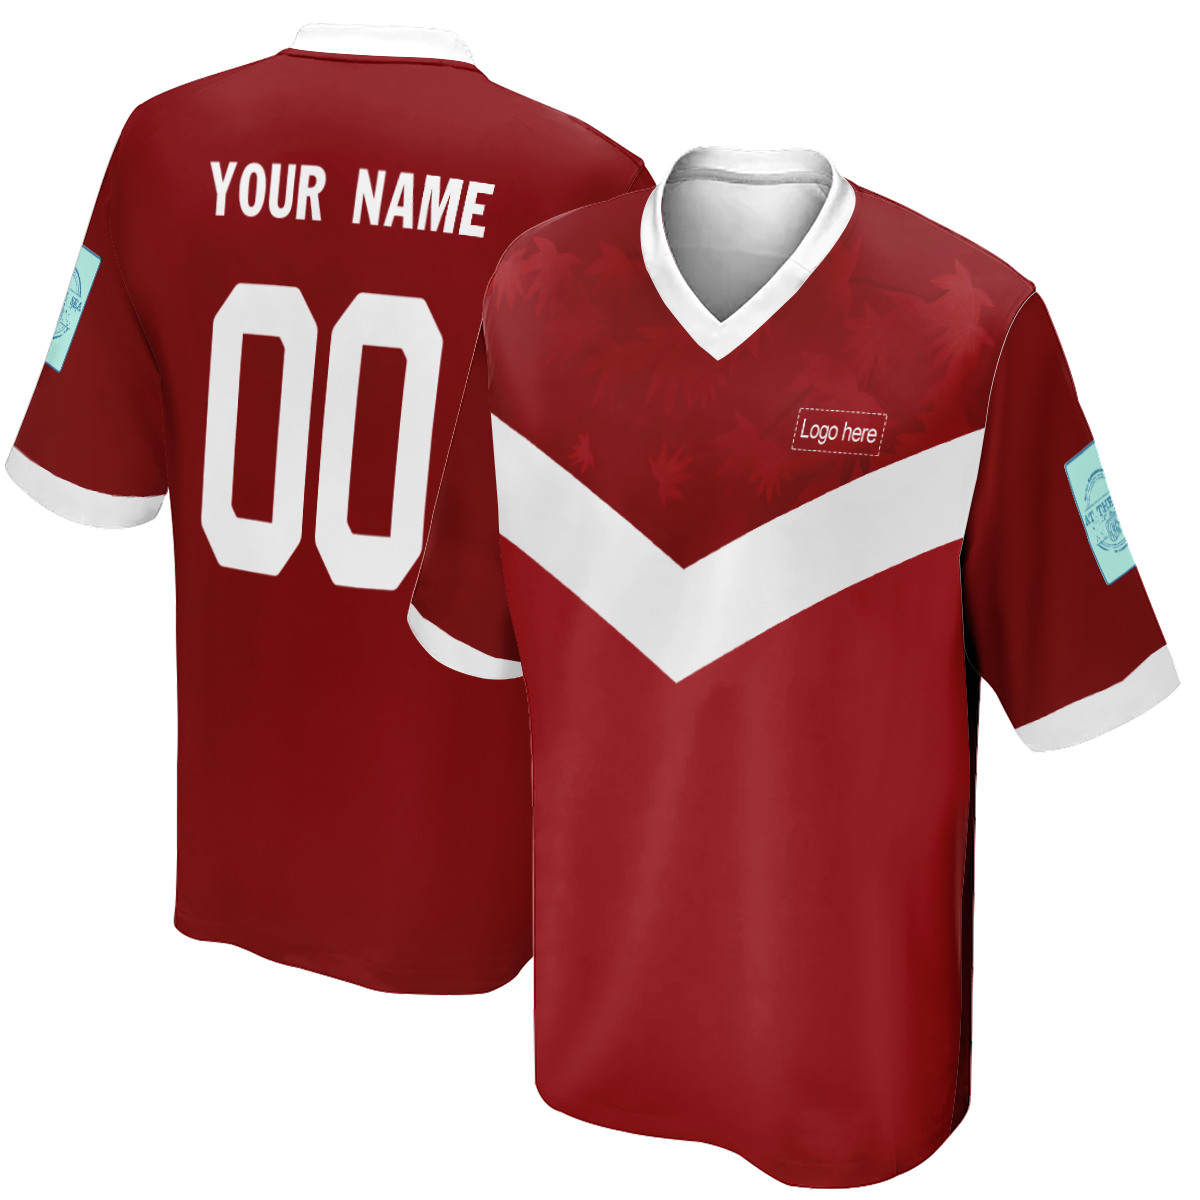 Reversible Canada World Cup Custom Soccer Jersey für Herren mit Namen